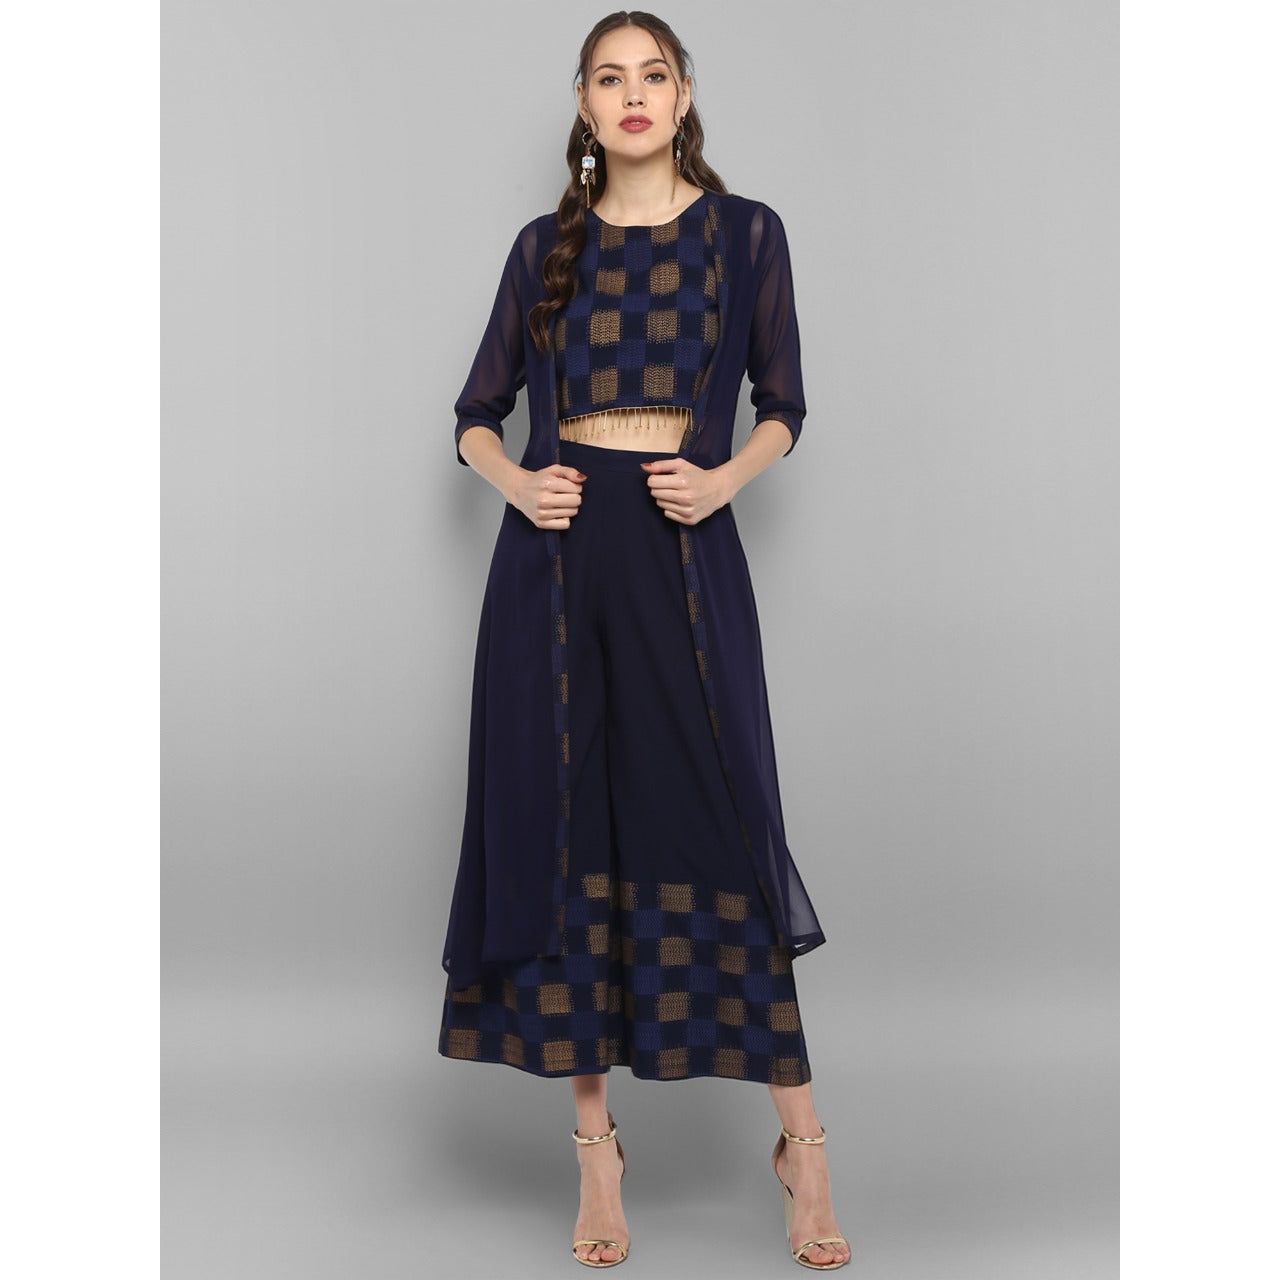 Dark Blue 3 Piece Set for Women/ Indian Fusion Wear